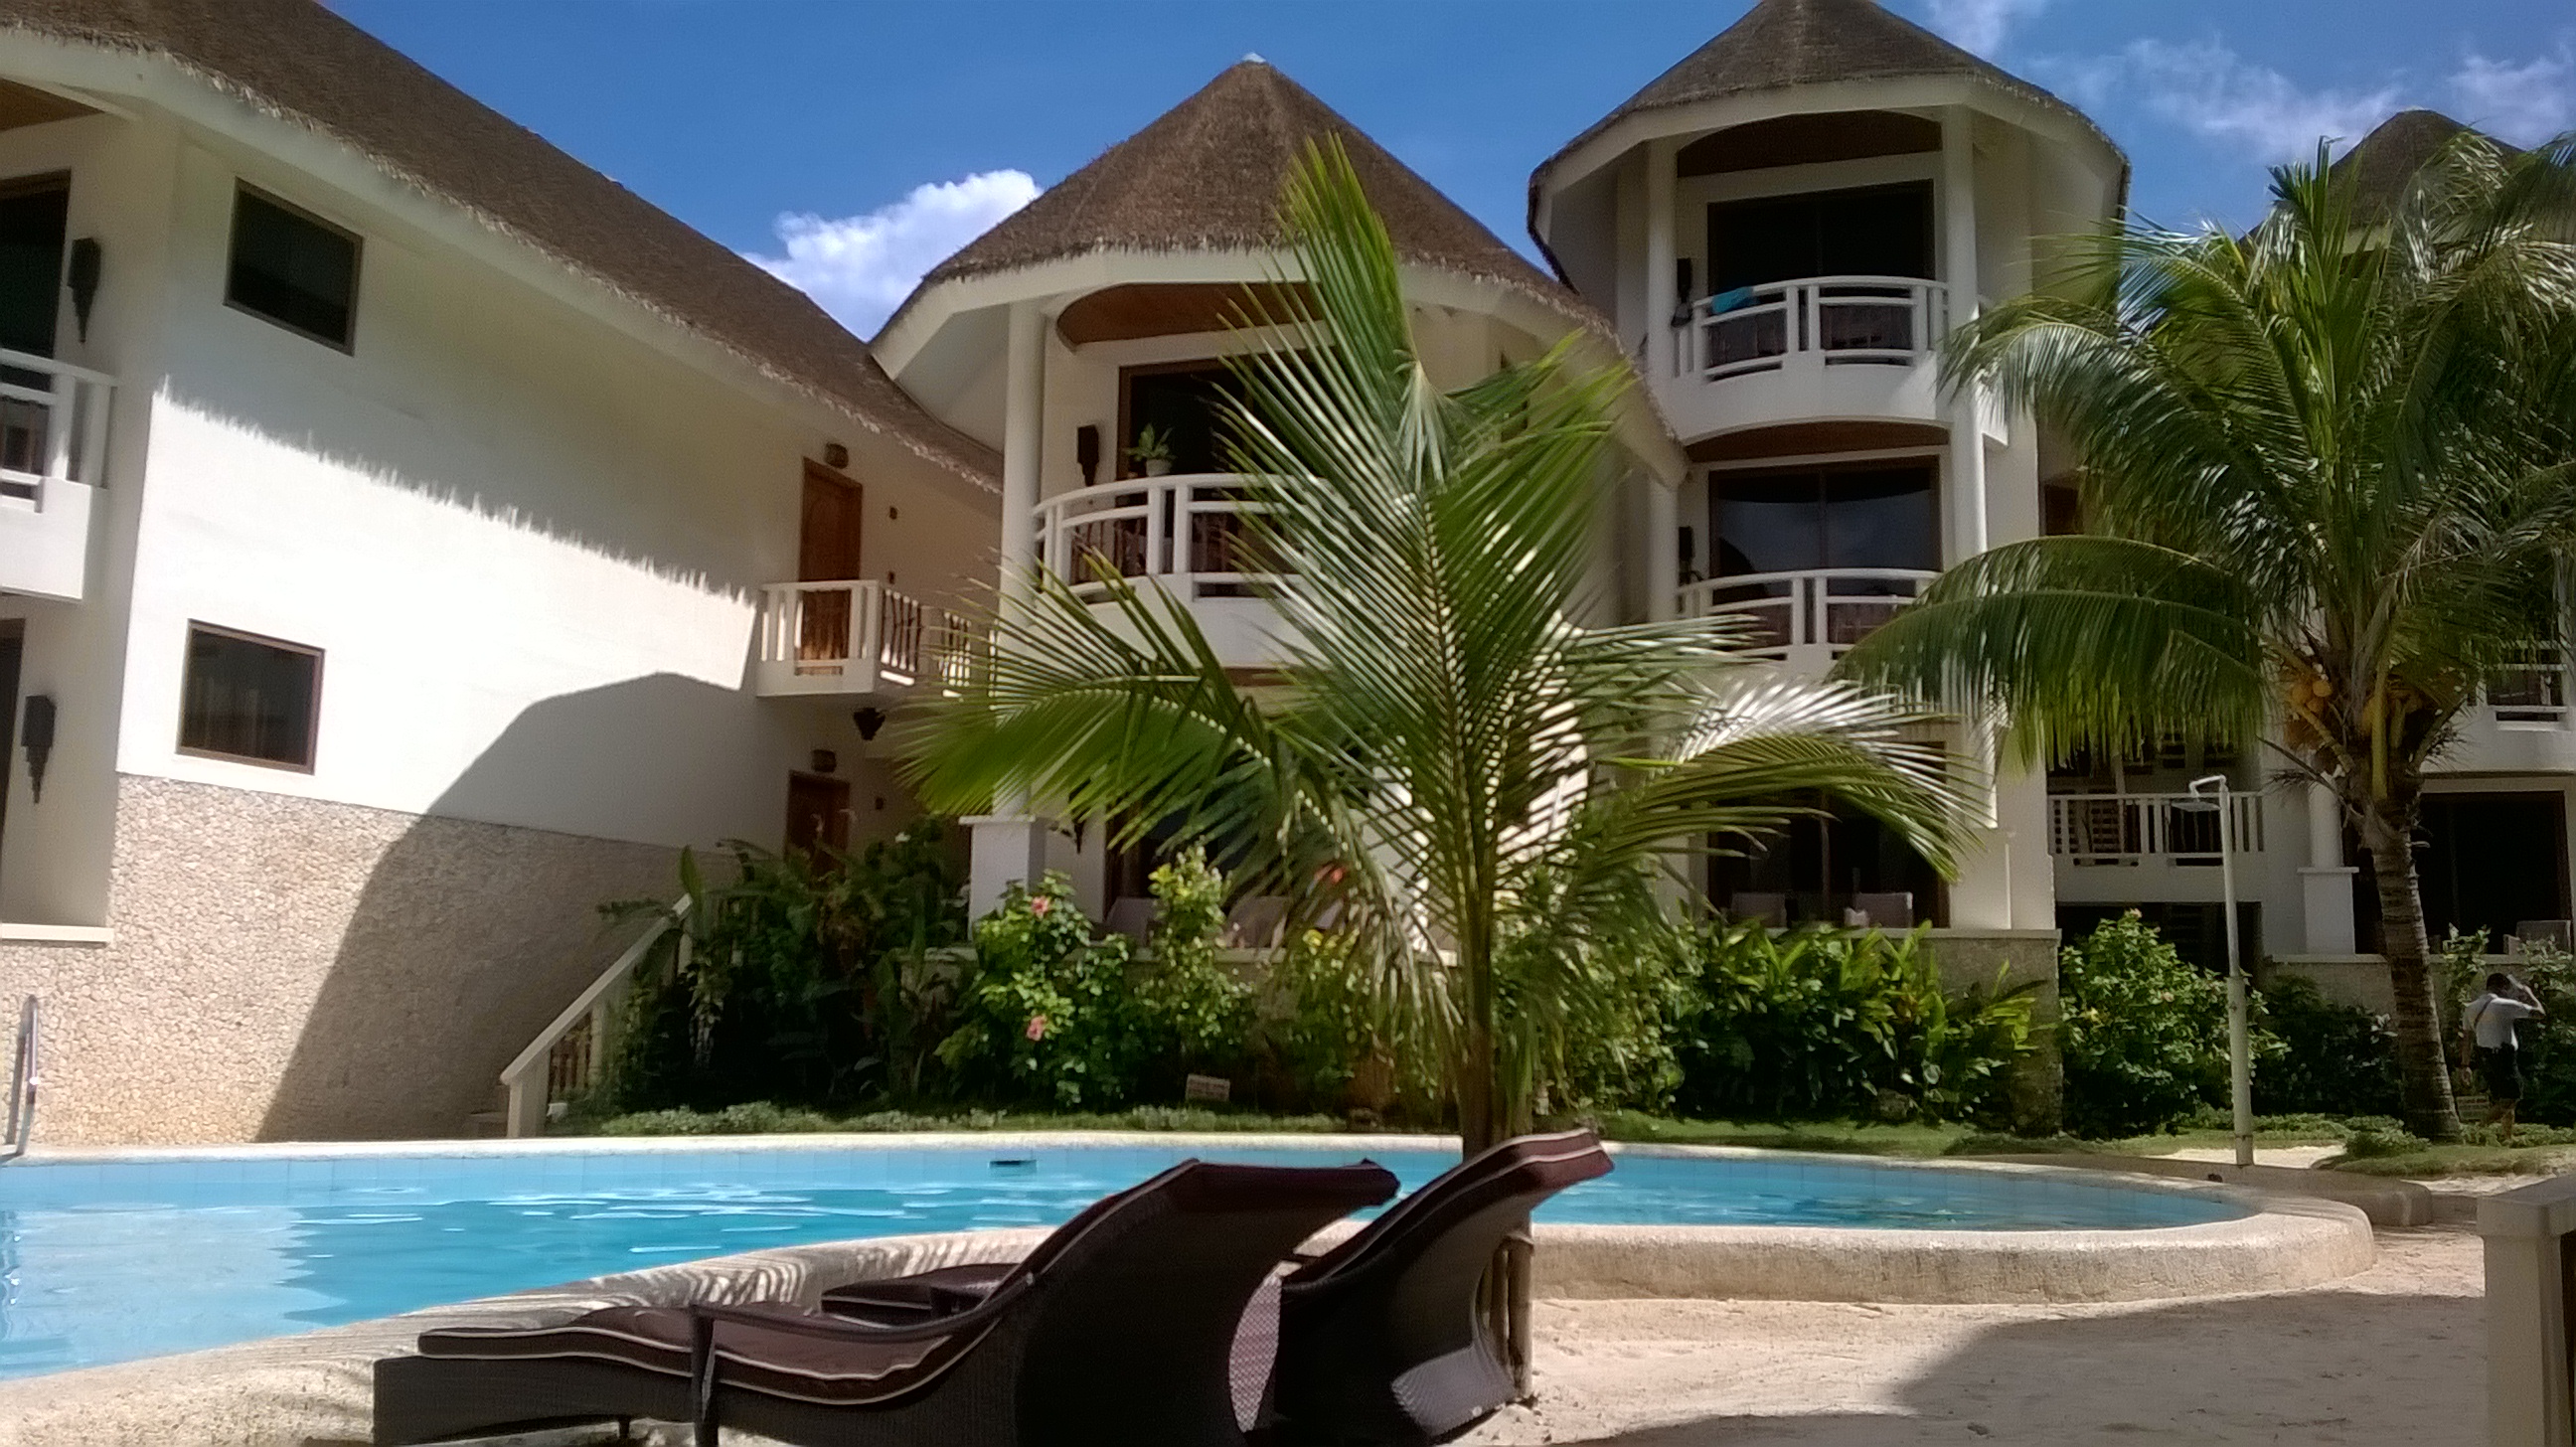 Swimming pool Ambassador in Paradise deluxe accommodation Boracay 